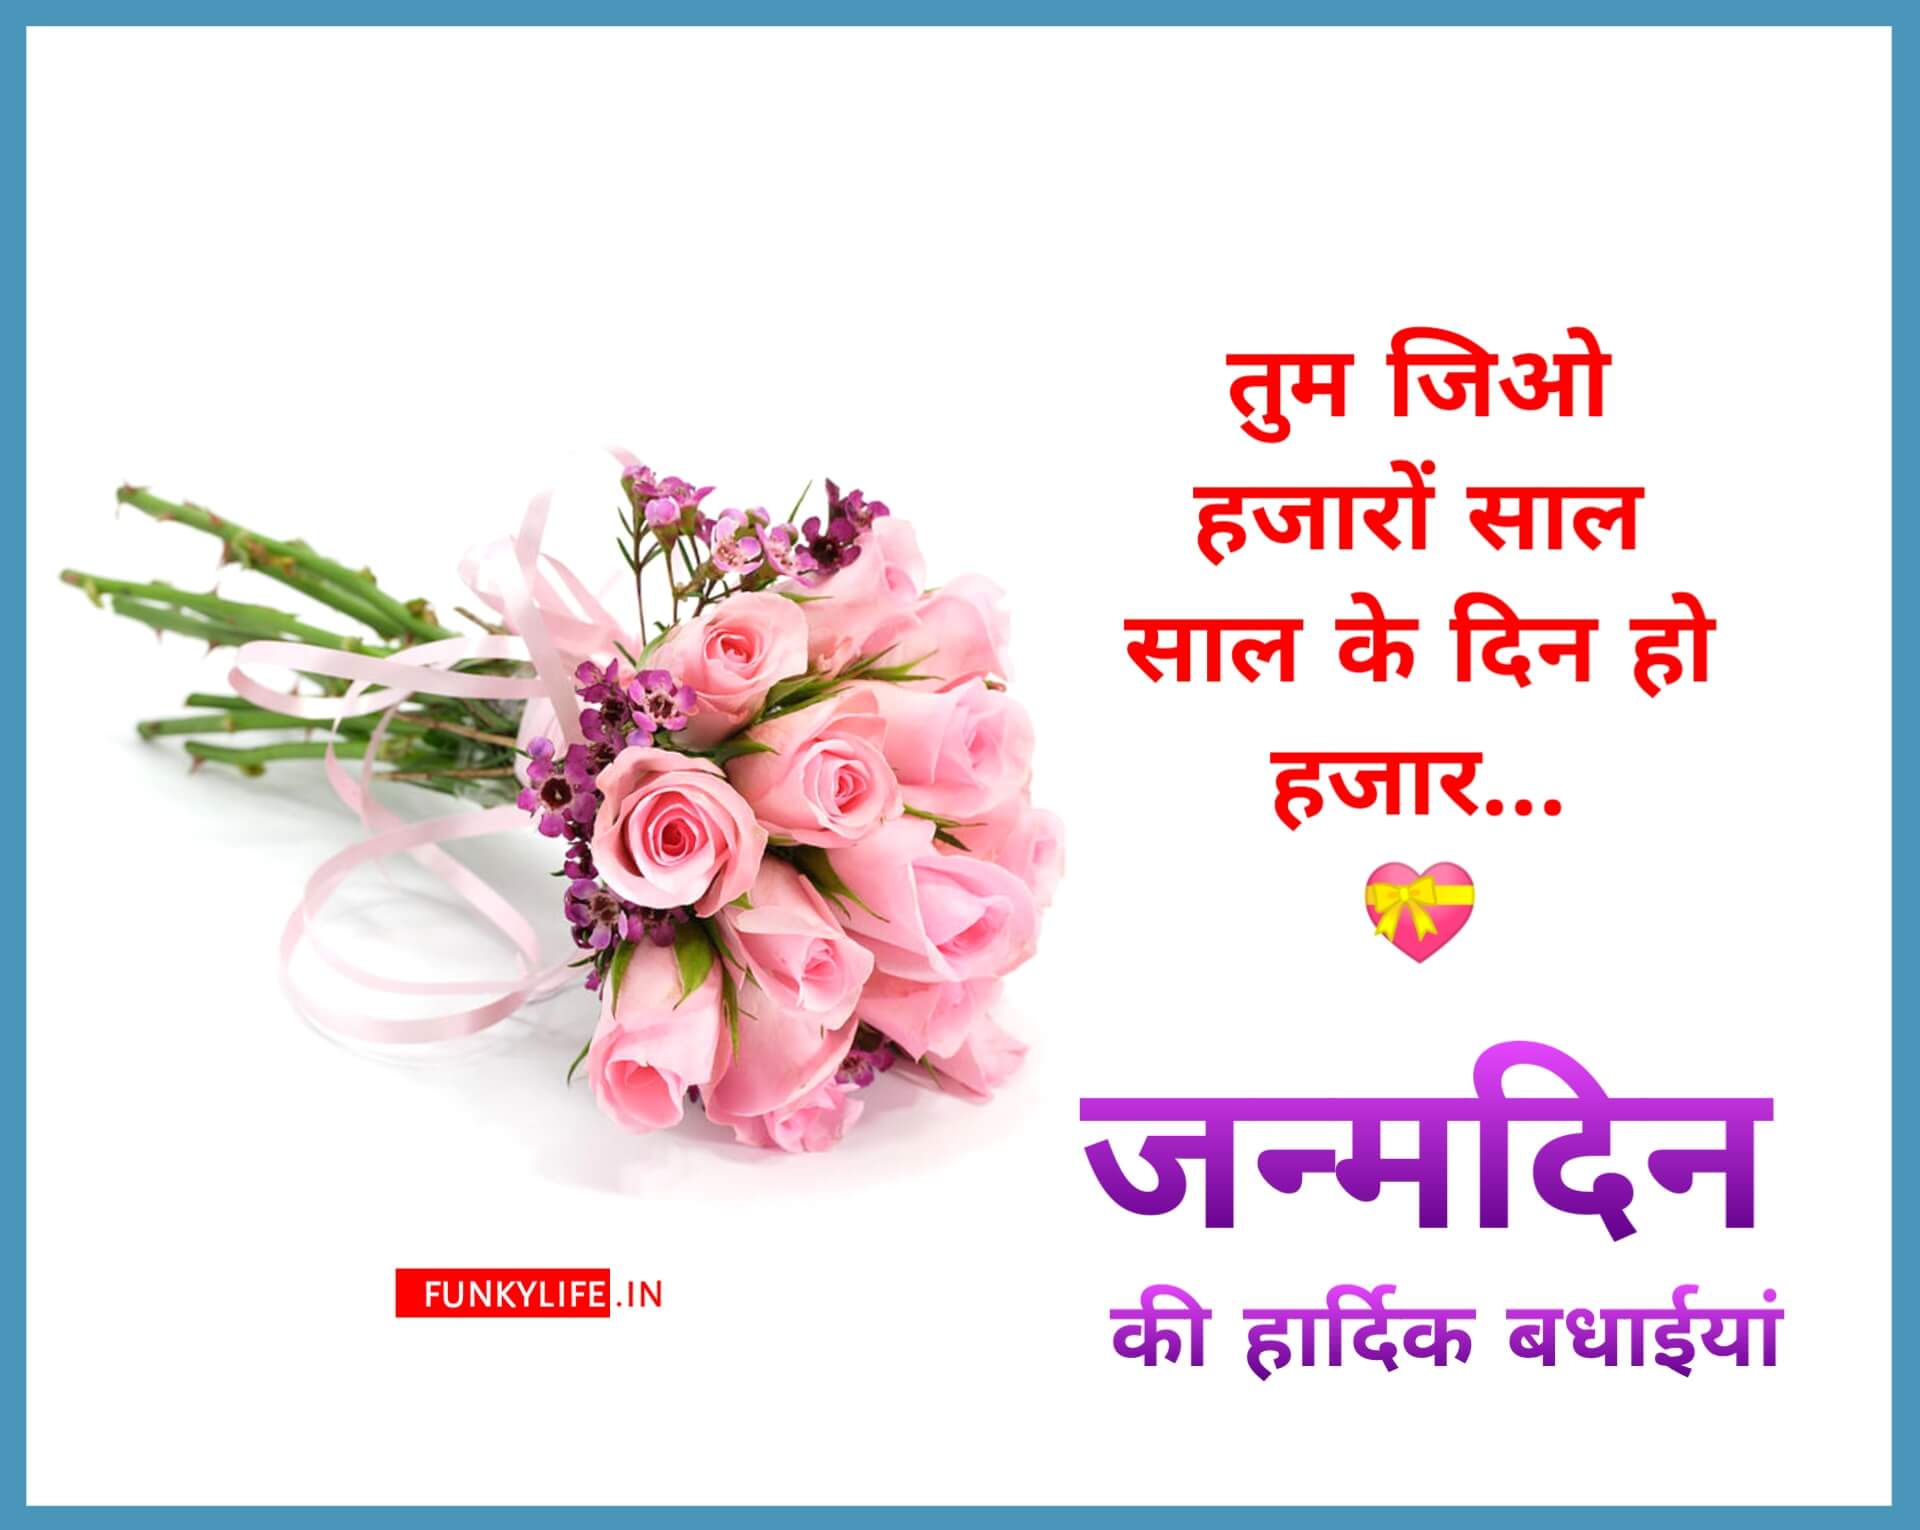 Happy Birthday Wishes In Hindi Shayari